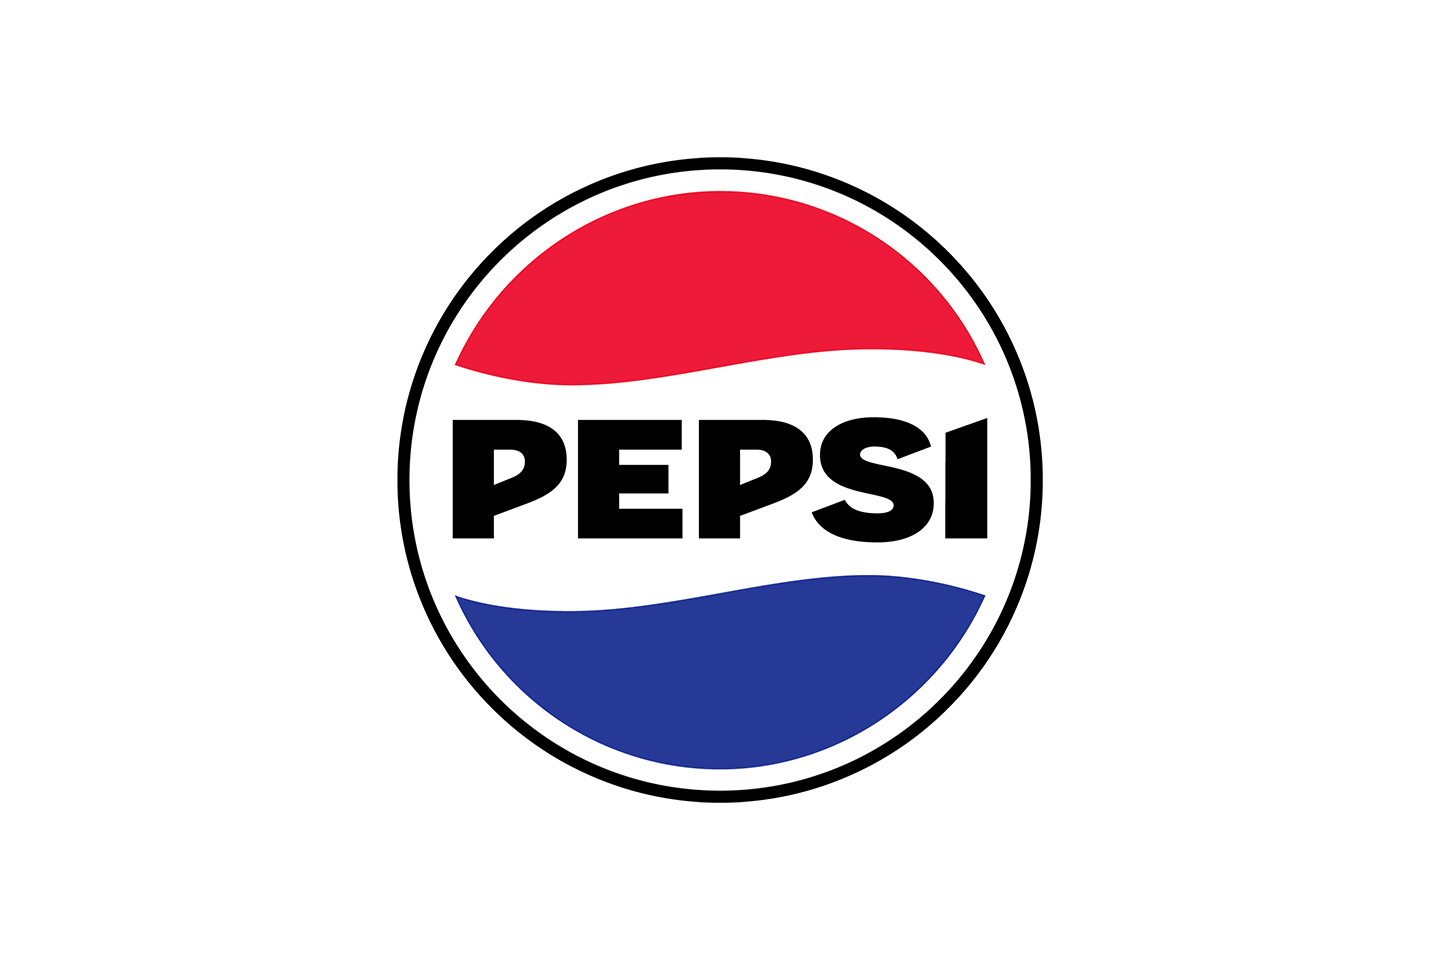 Pepsi 
Large